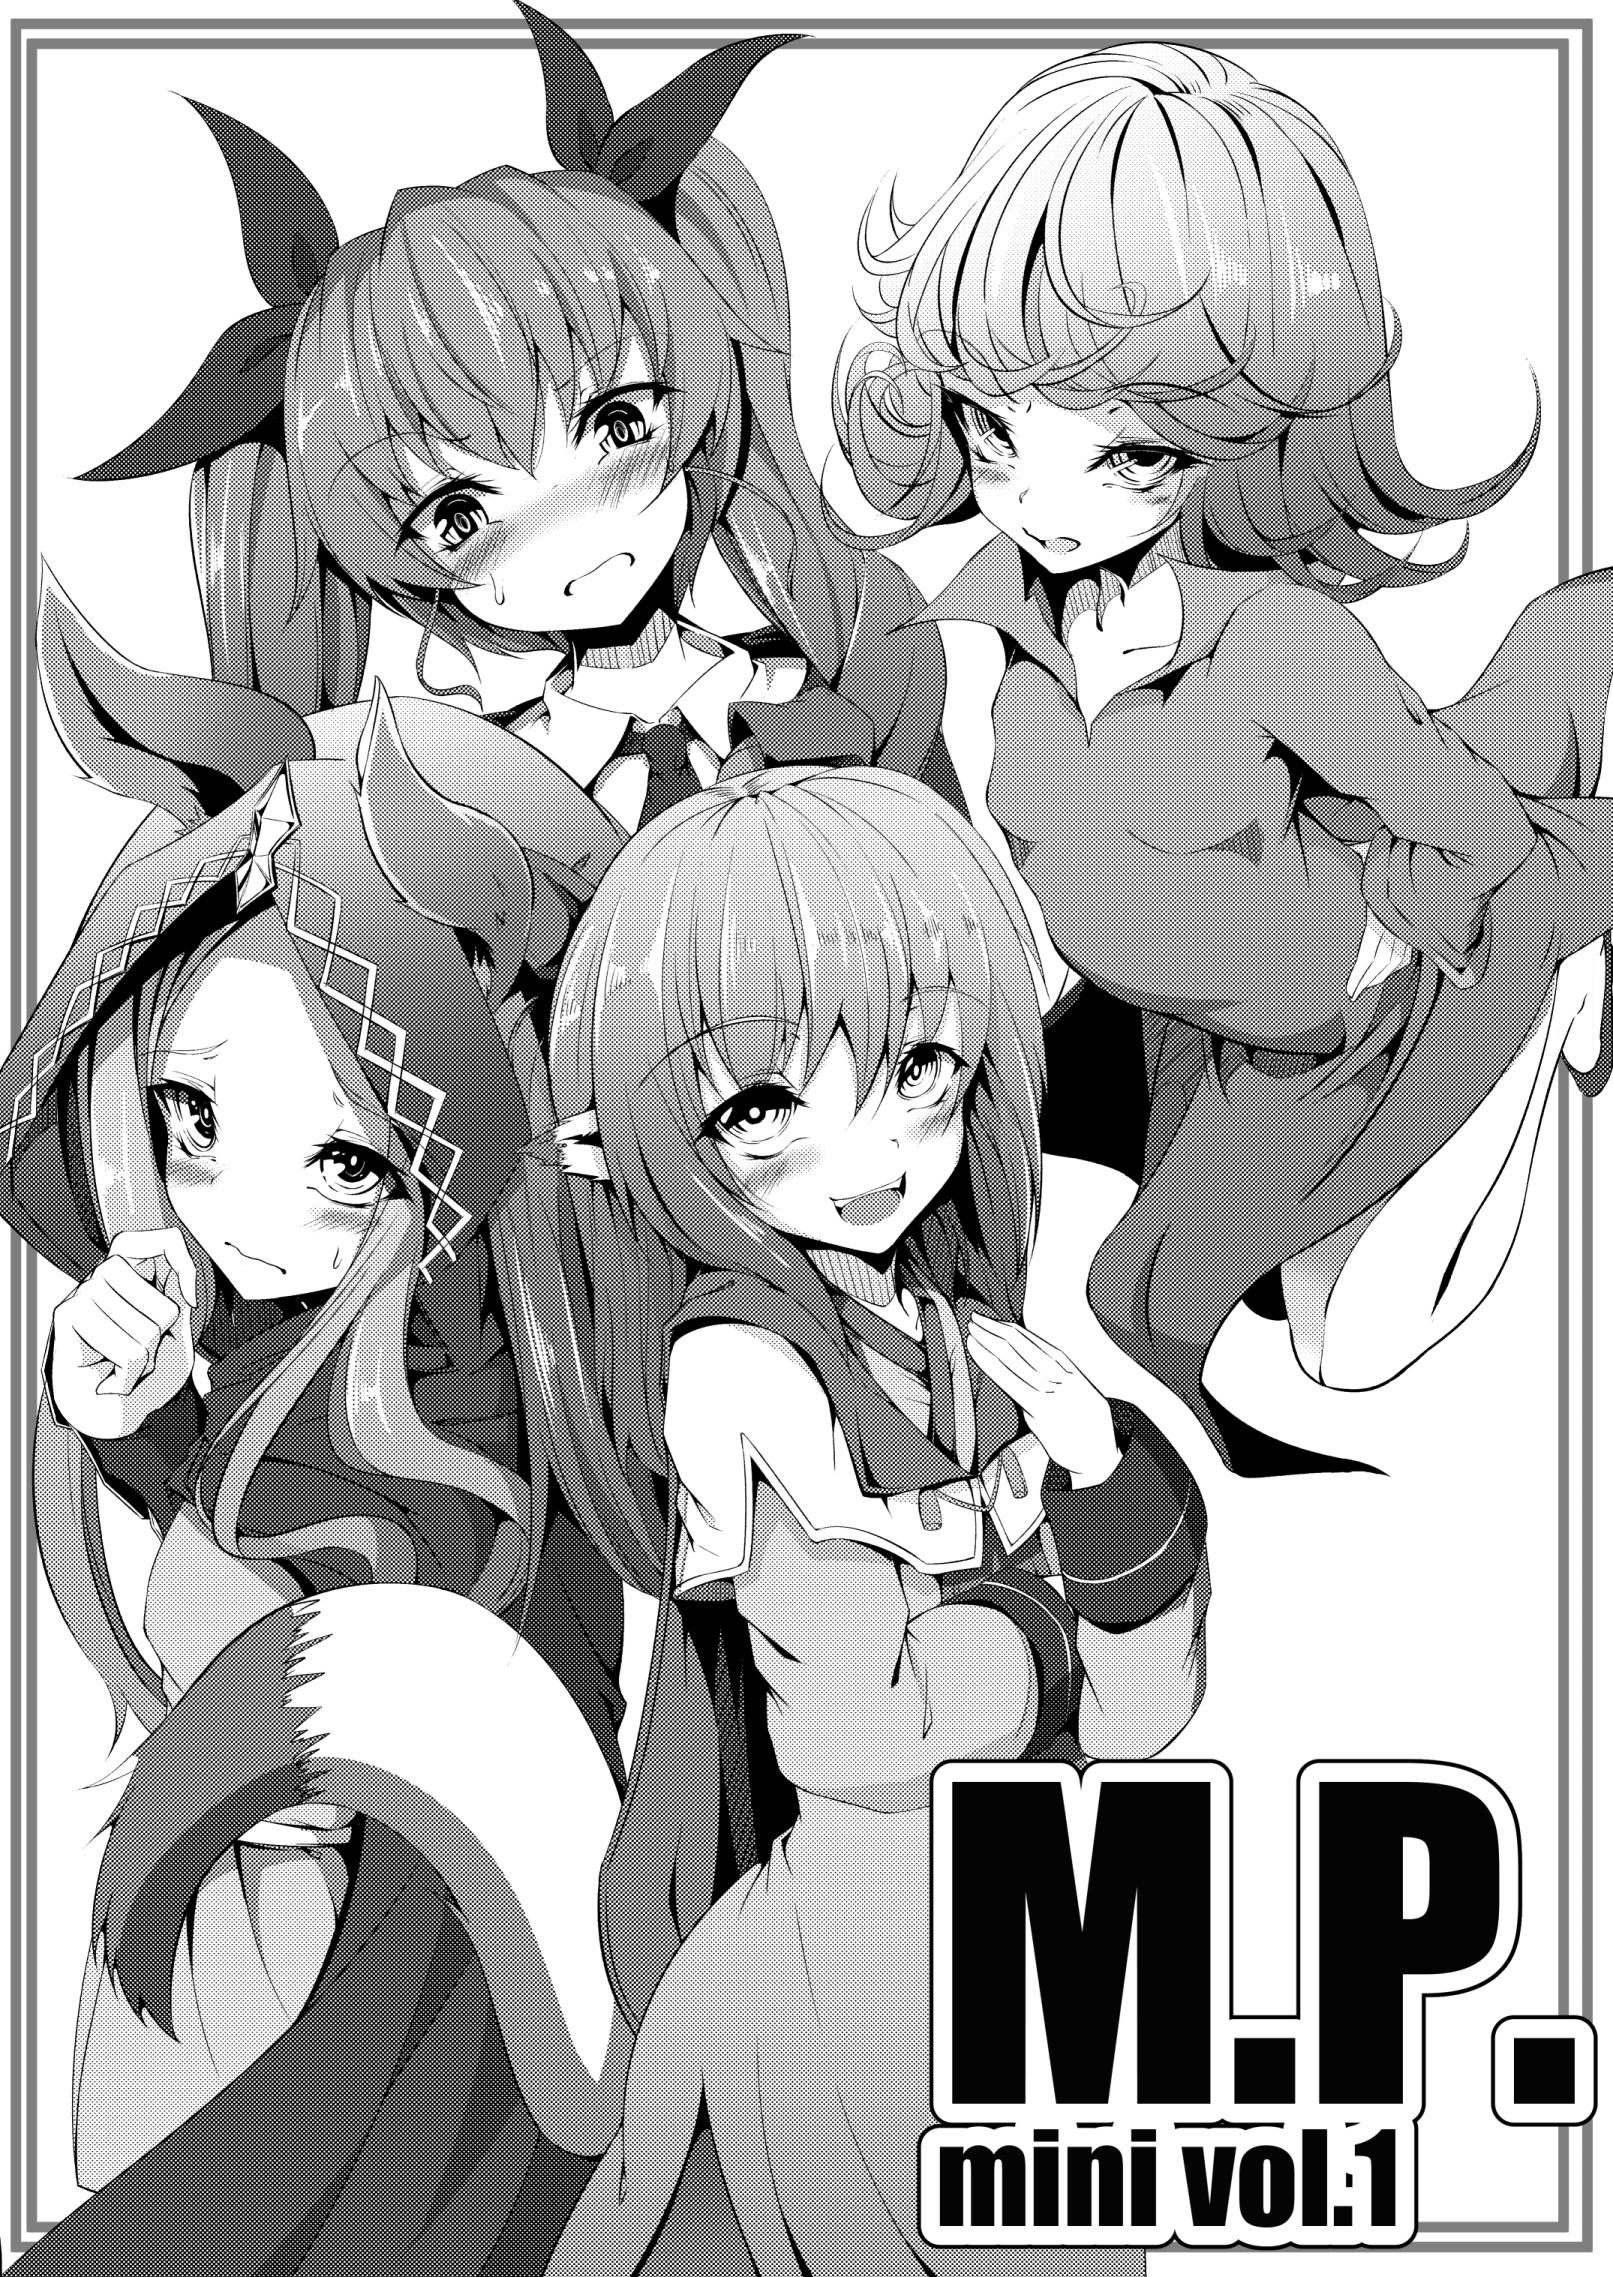 M.P.mini vol.1 0